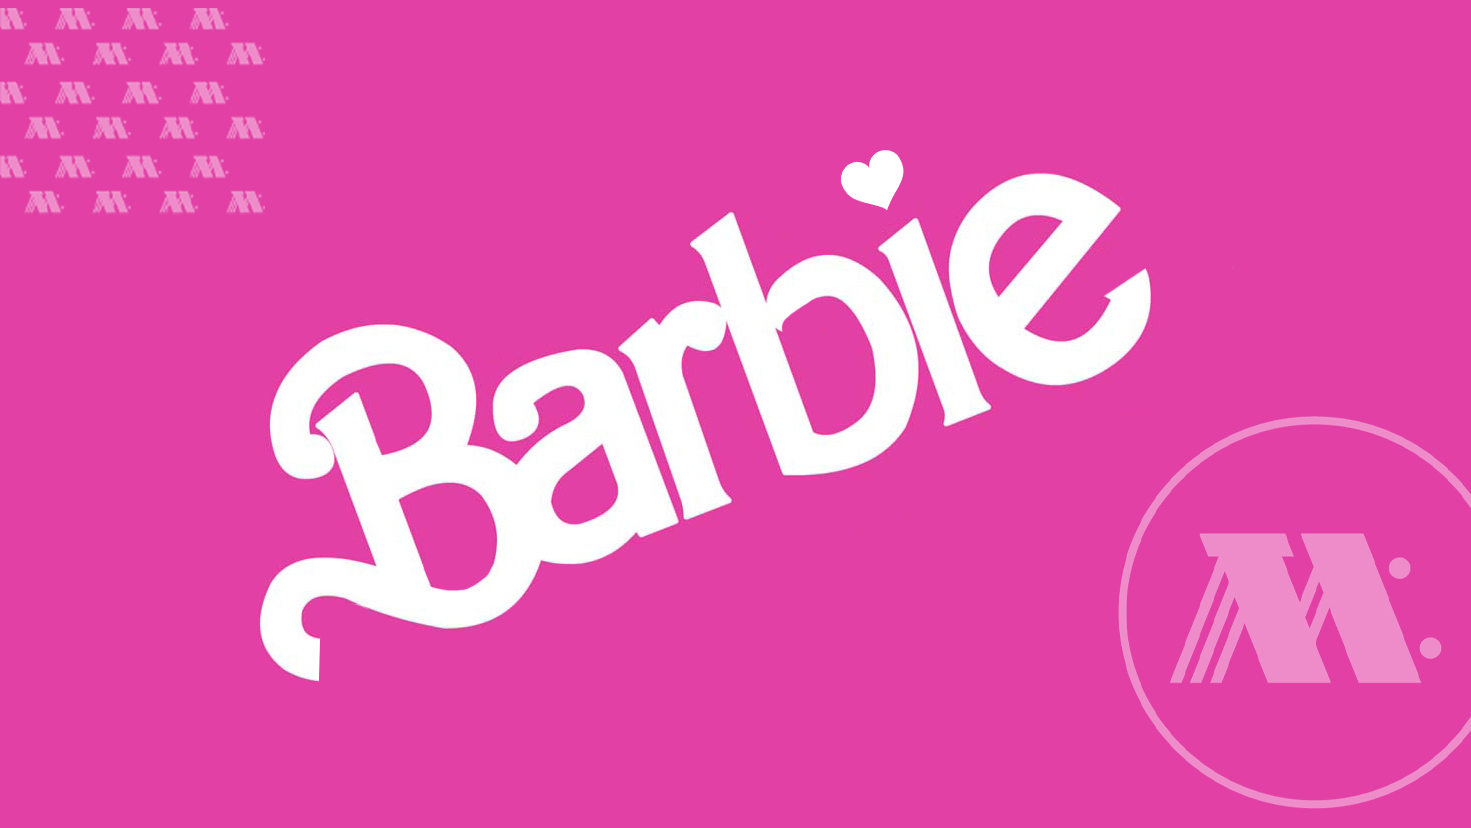 NEW: Camp Barbie